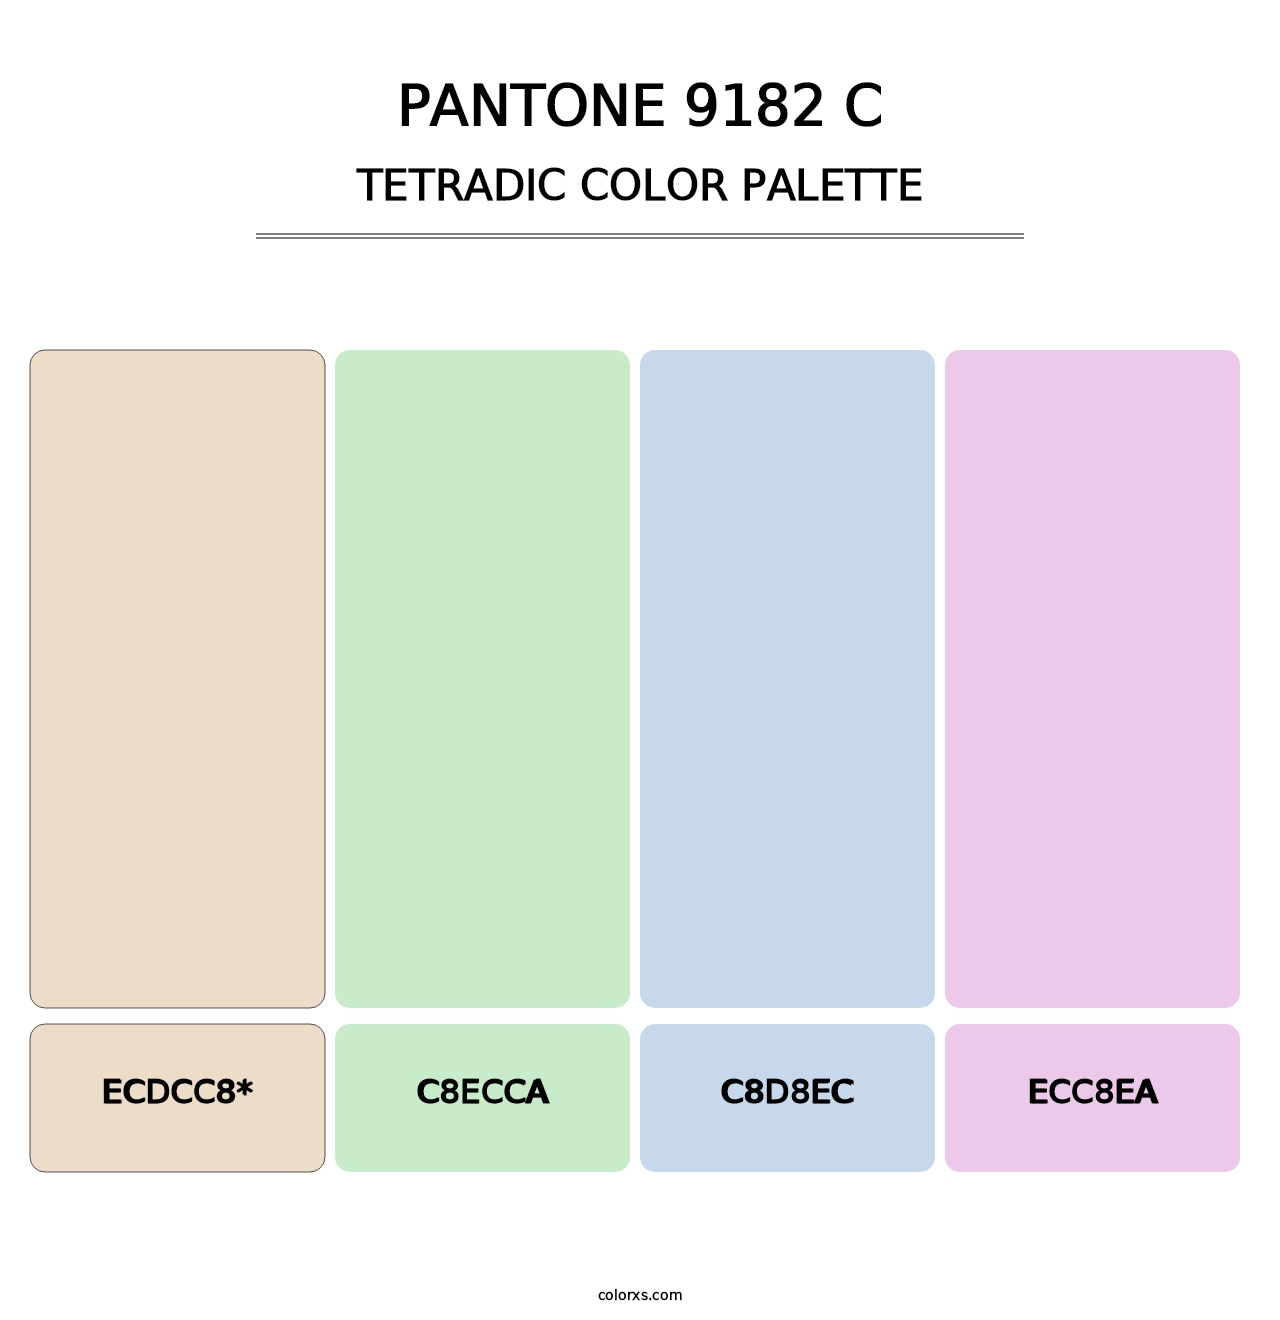 PANTONE 9182 C - Tetradic Color Palette